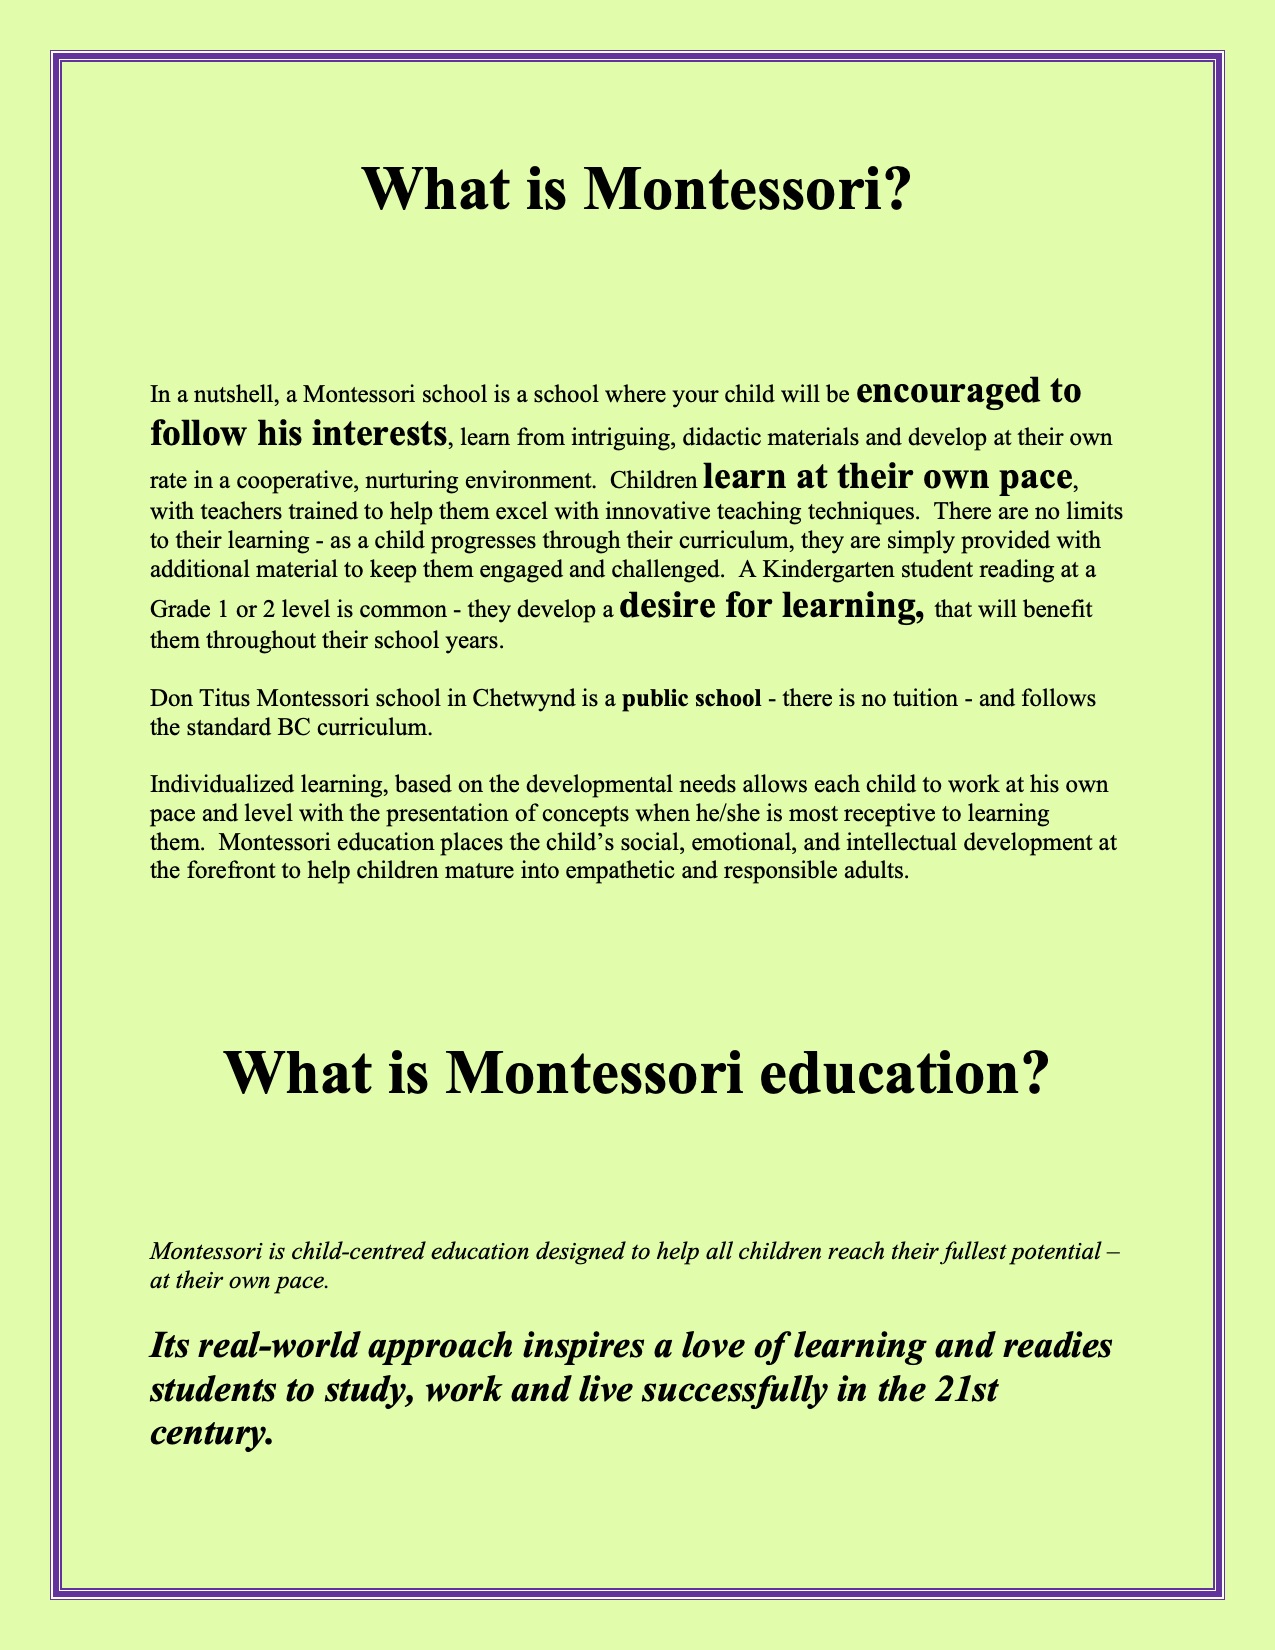 What is Montessori & what is Montessori education